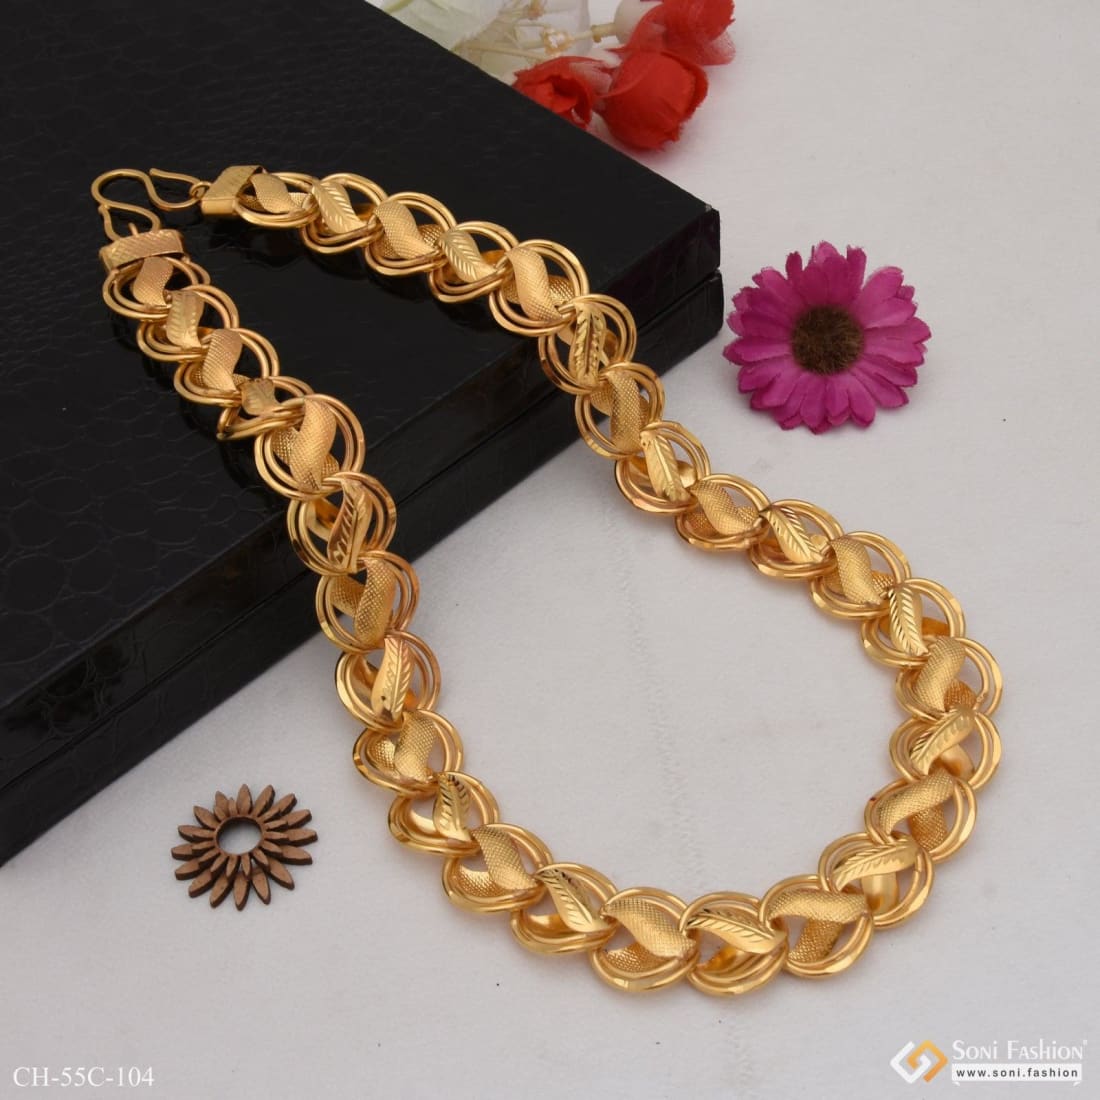 Single Piece Clip Open Bracelet One Gram Gold Jewellery Designs B25329